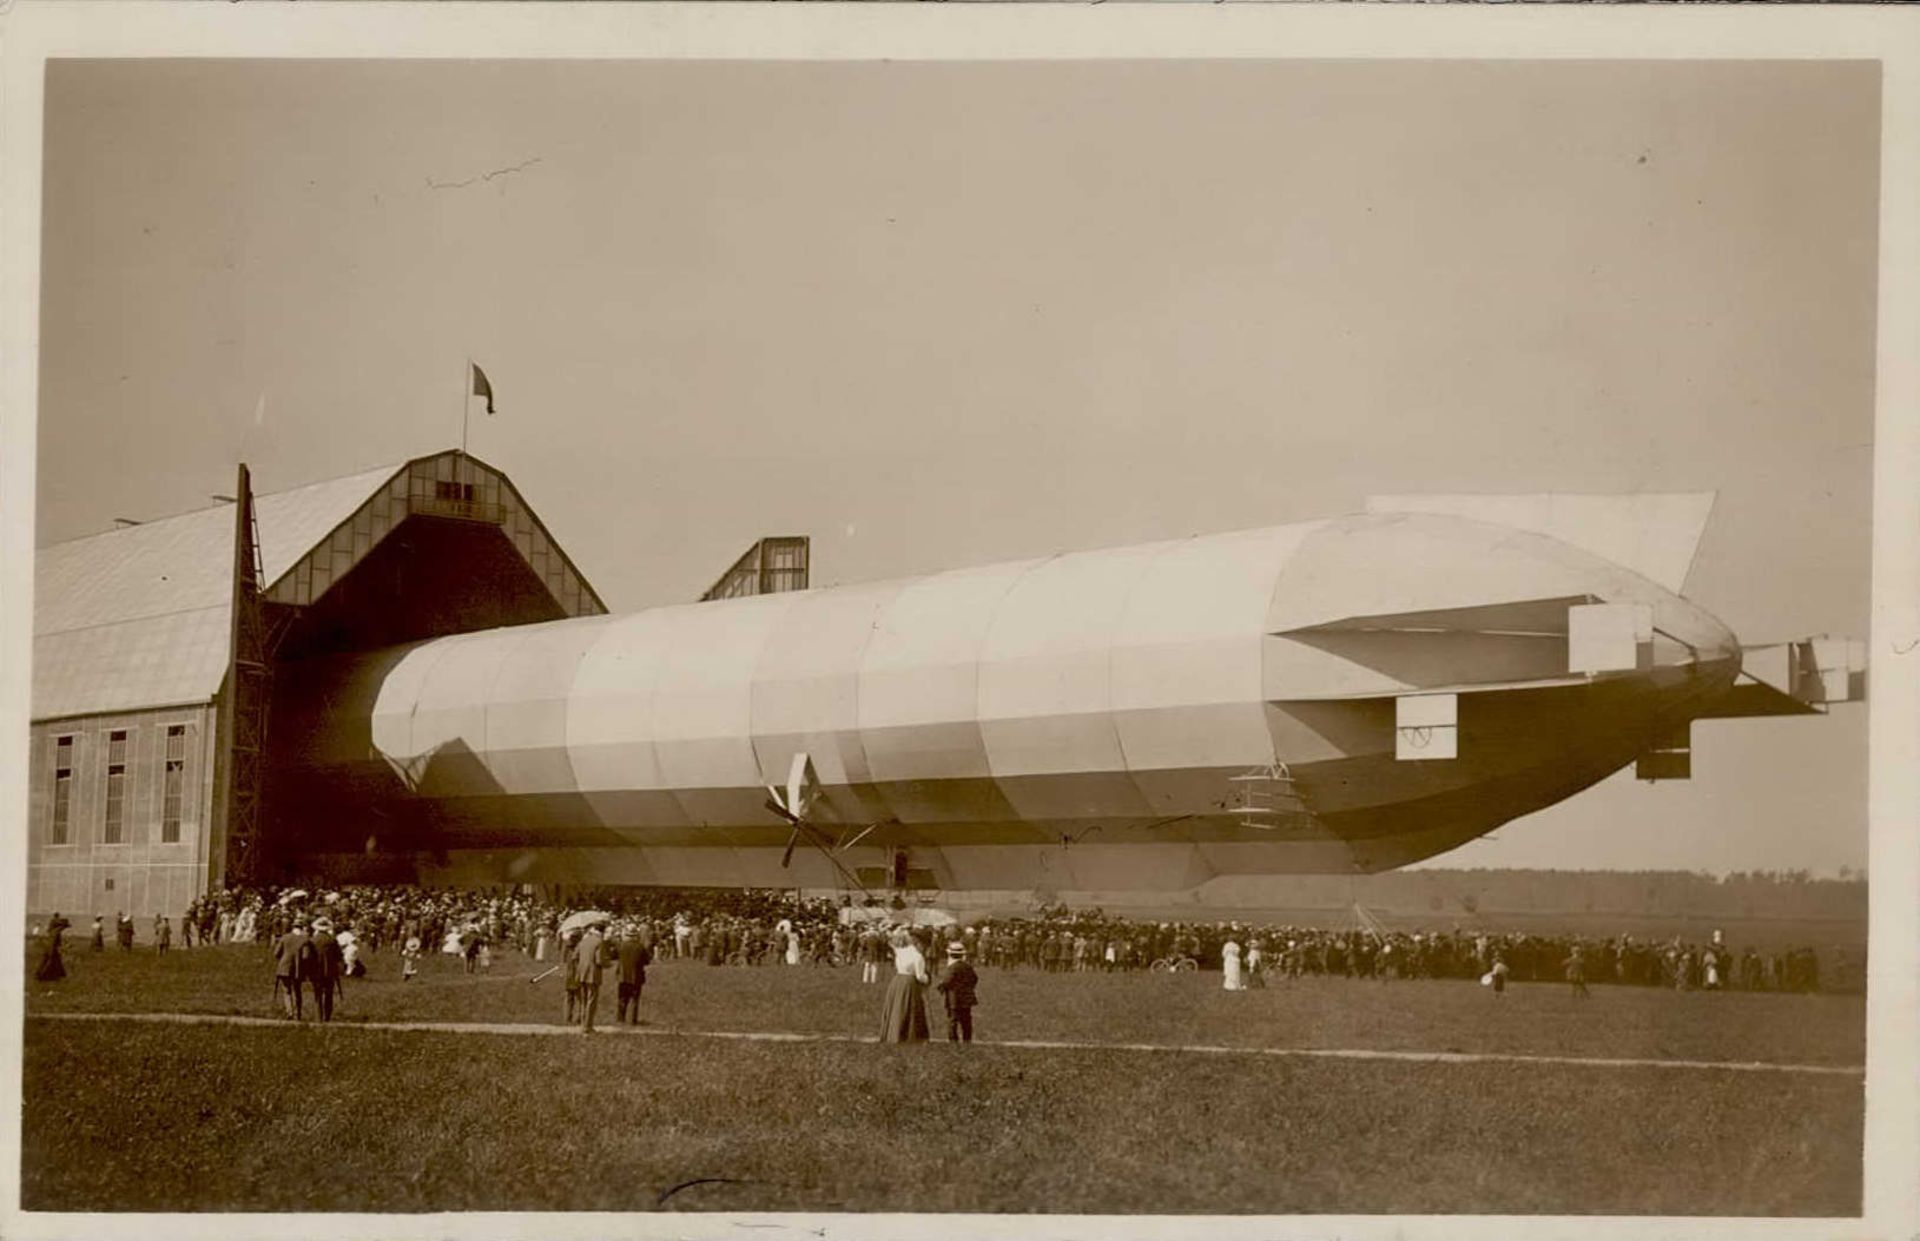 Zeppelin Baden-Baden L.Z. VI 21. Aug. 1910 Foto-AK I-II